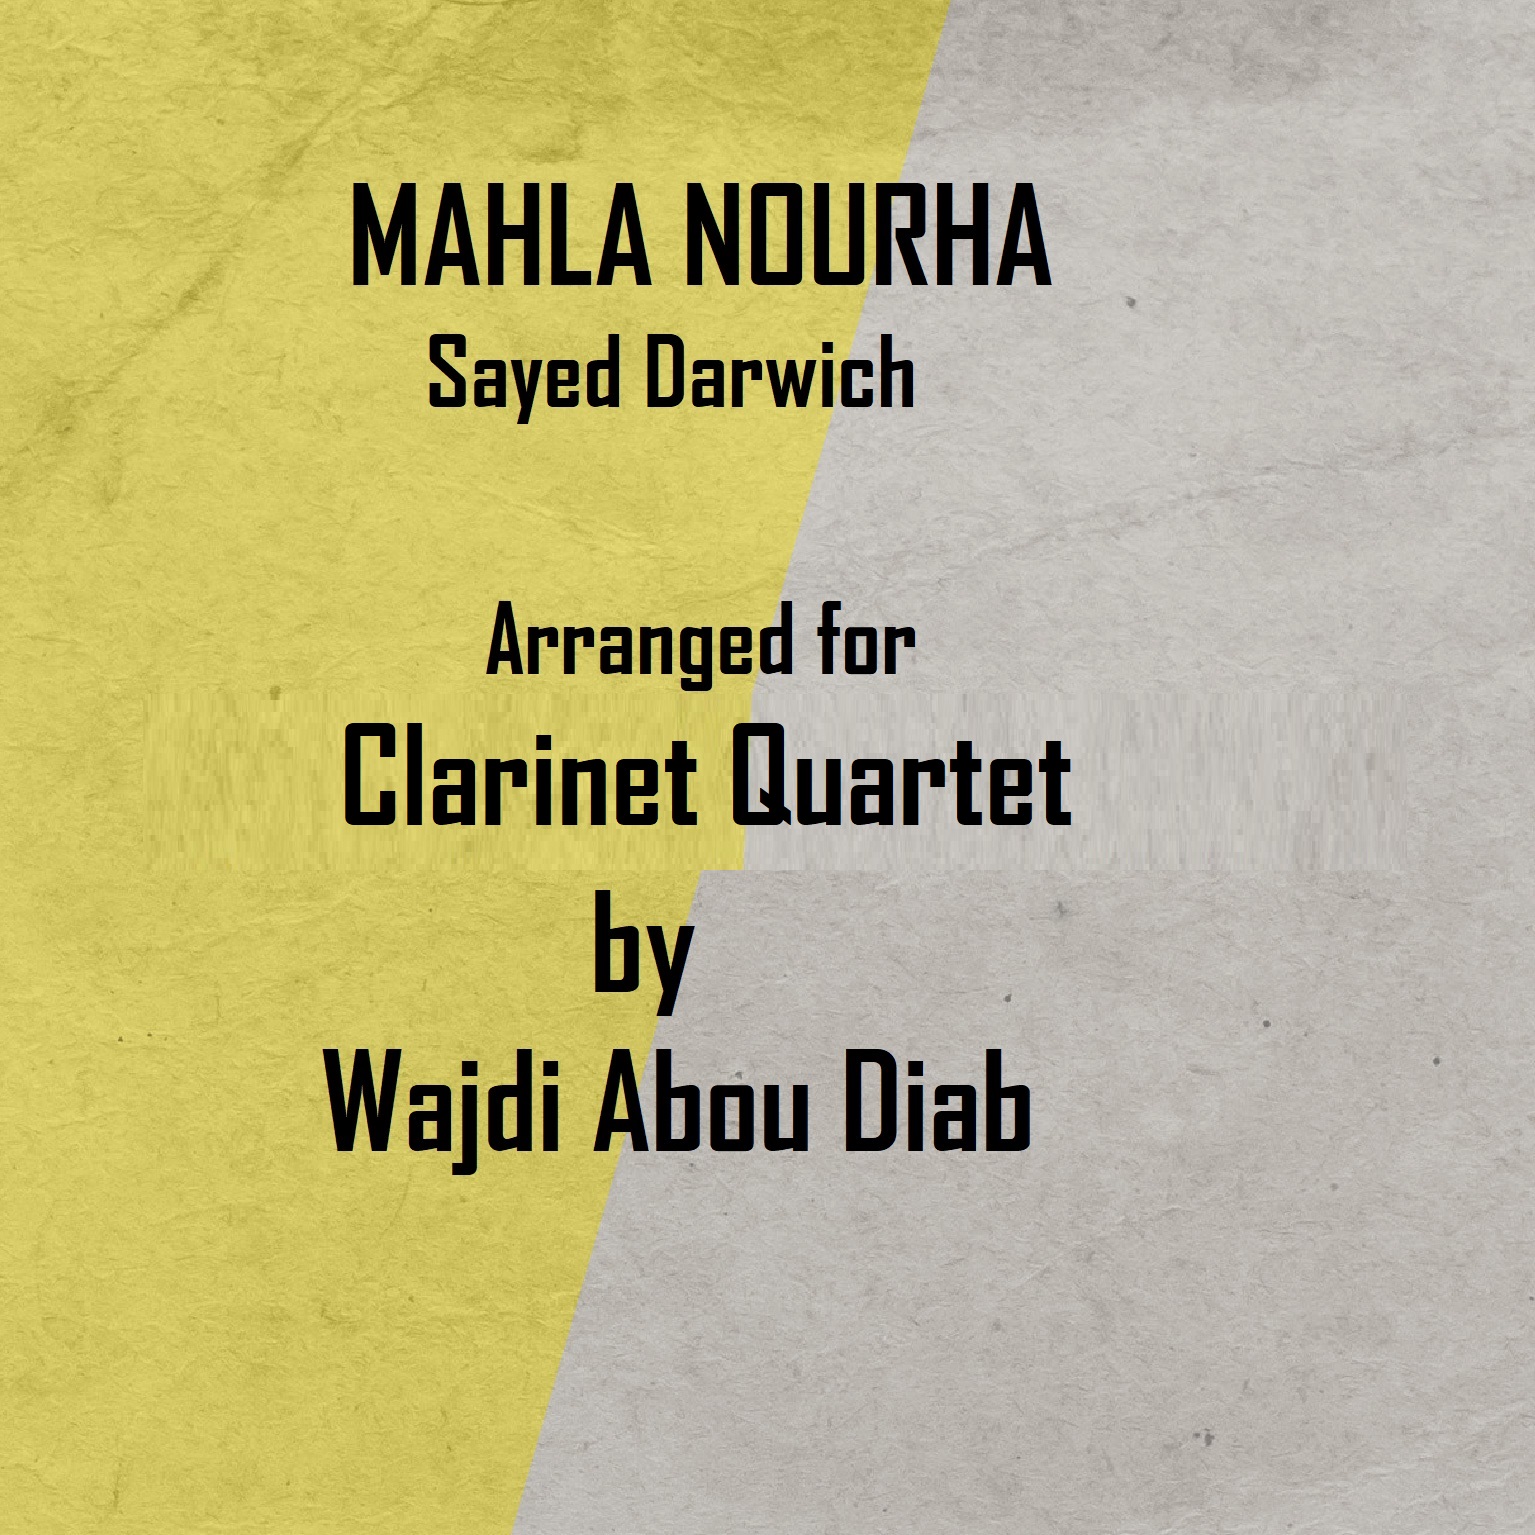 MAHlA NOURHA – Clarinet Quartet